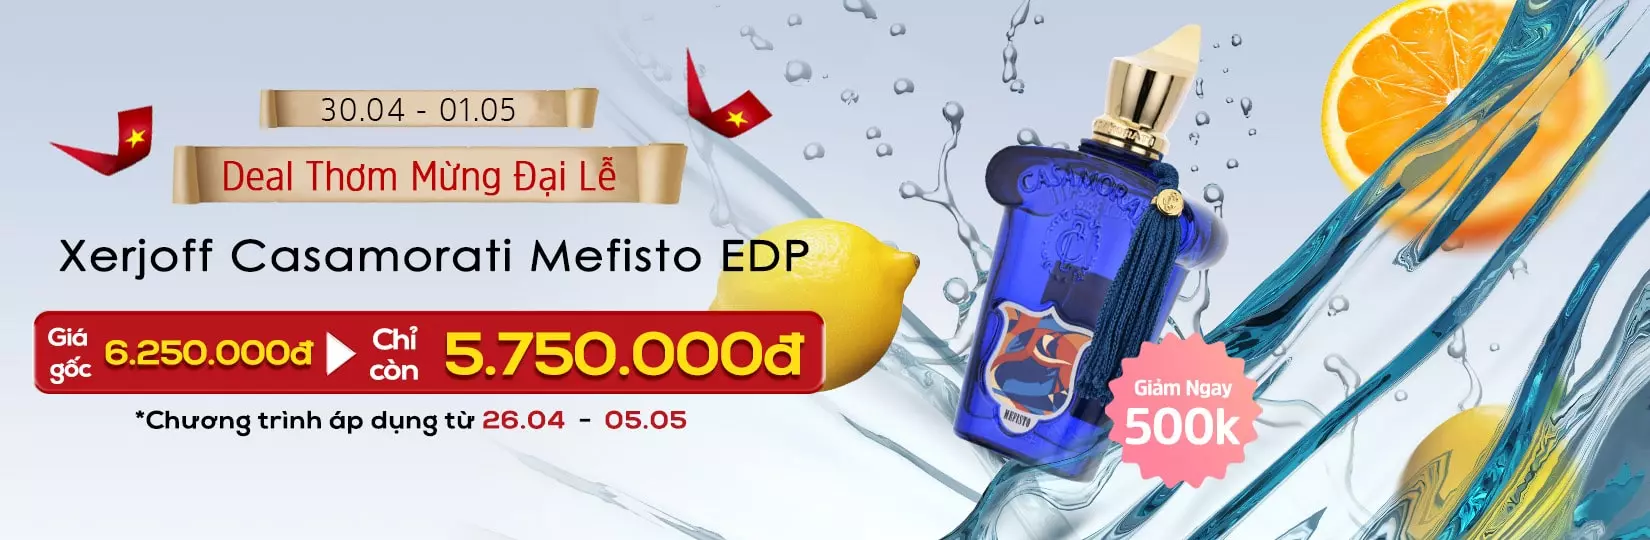 nước hoa Xerjoff Casamorati Mefisto EDP